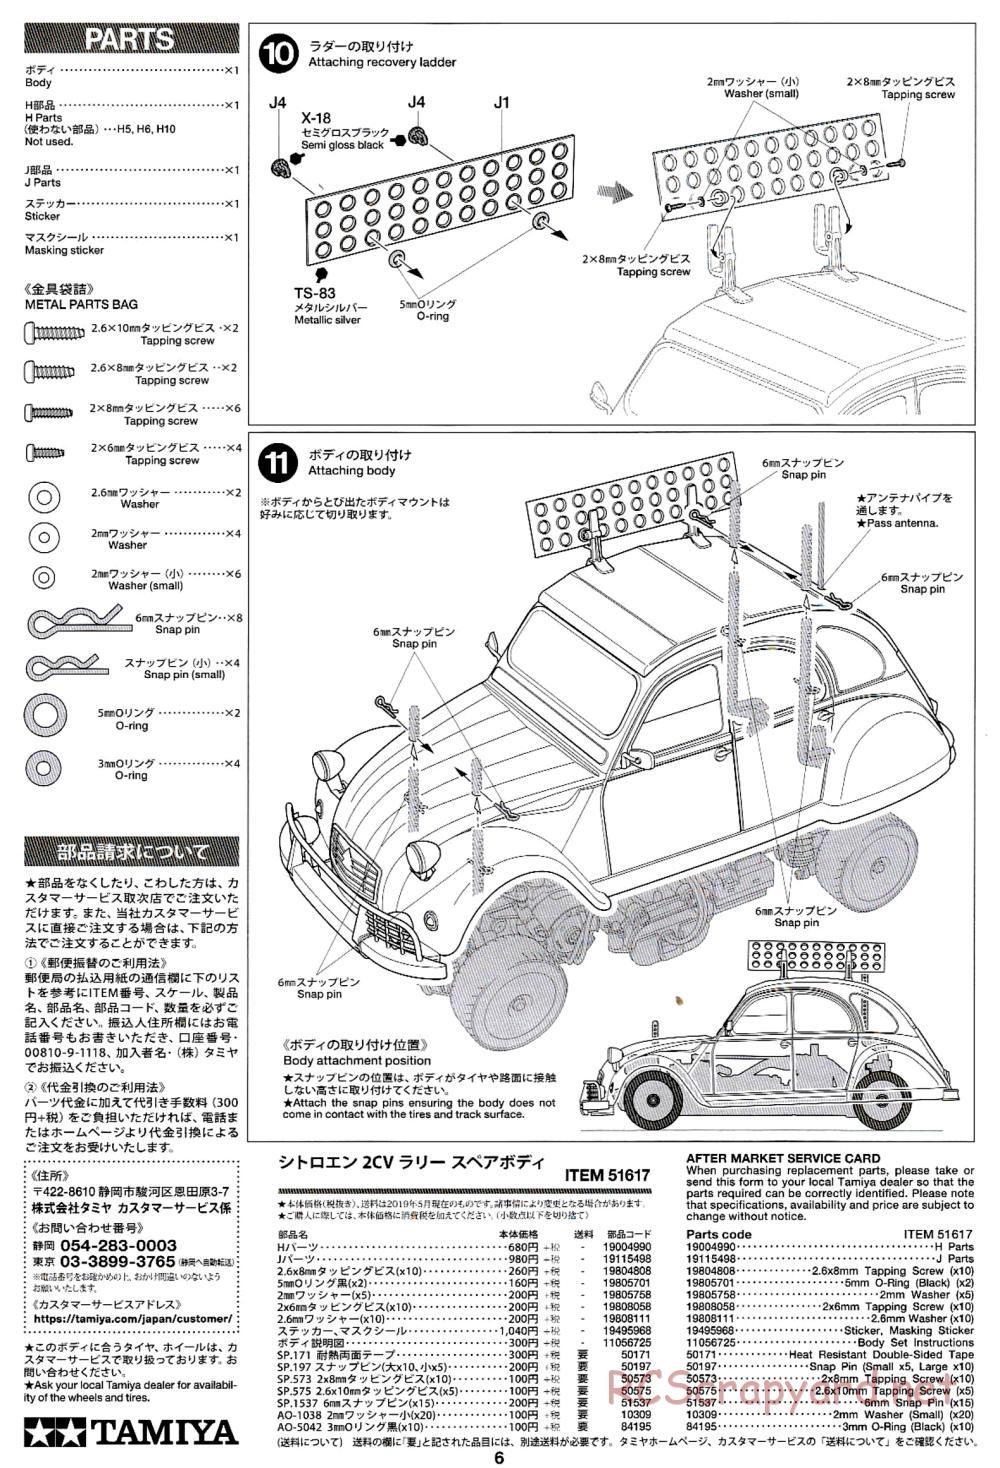 Tamiya - Citroen 2CV Rally - M-05Ra Chassis - Body Manual - Page 6